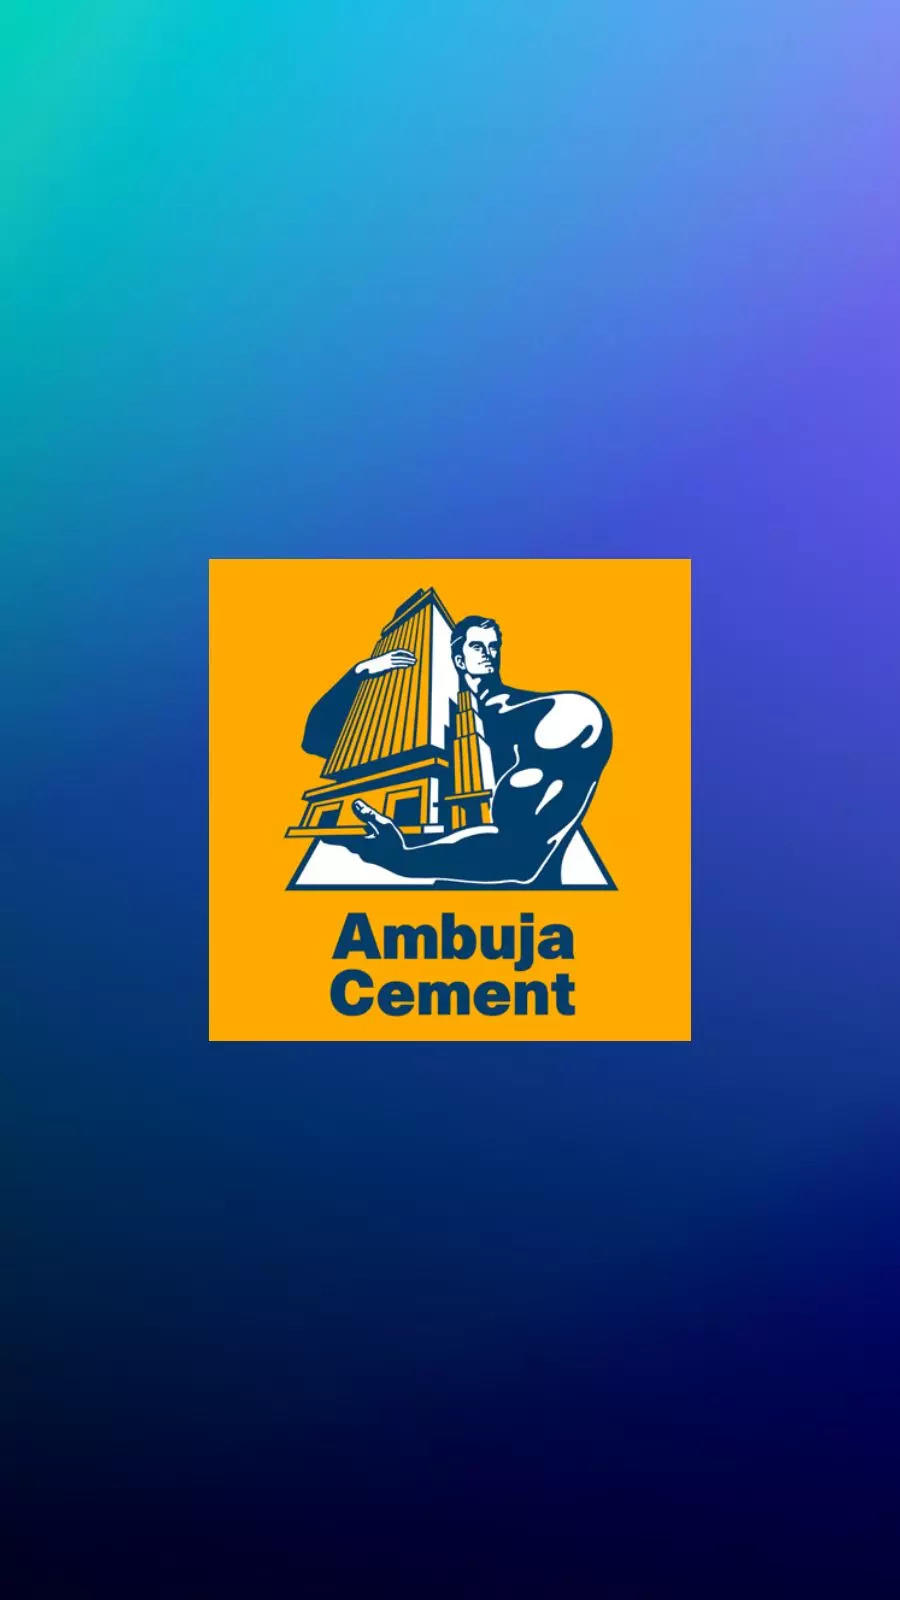 Ambuja Cement Limited - We are proud partners of the Gujarat Giants Team at  India's first-ever professional Kho Kho League - Ultimate Kho Kho  #GiantCompressiveStrength #UltimateKhoKho #IndiaMaarChalaang #AbKhoHoga  #KhoKho #GarjegaGujarat #GiantArmy ...